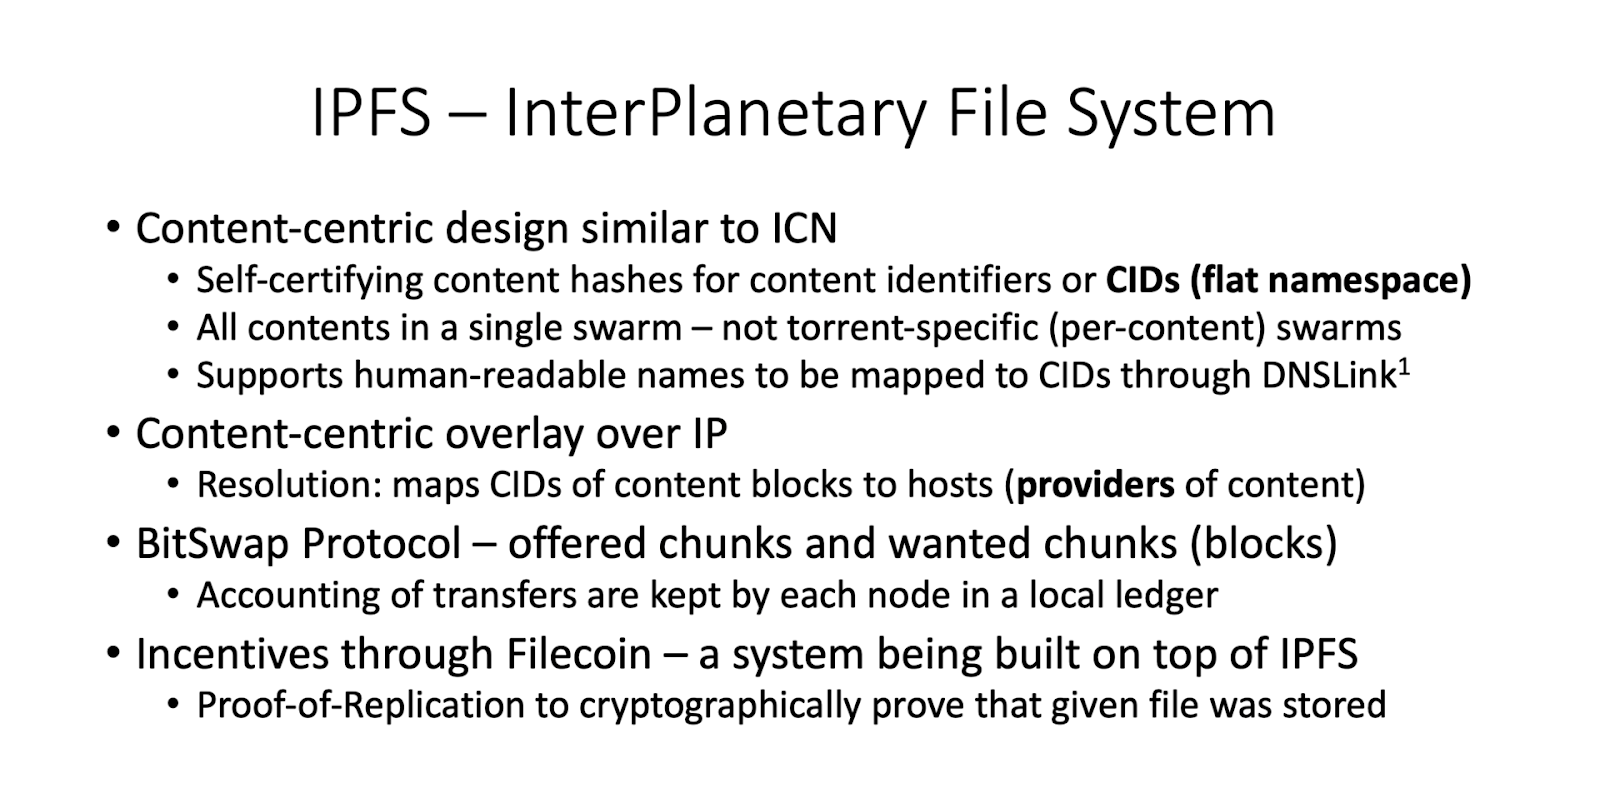 IPFS Interplanetary File System